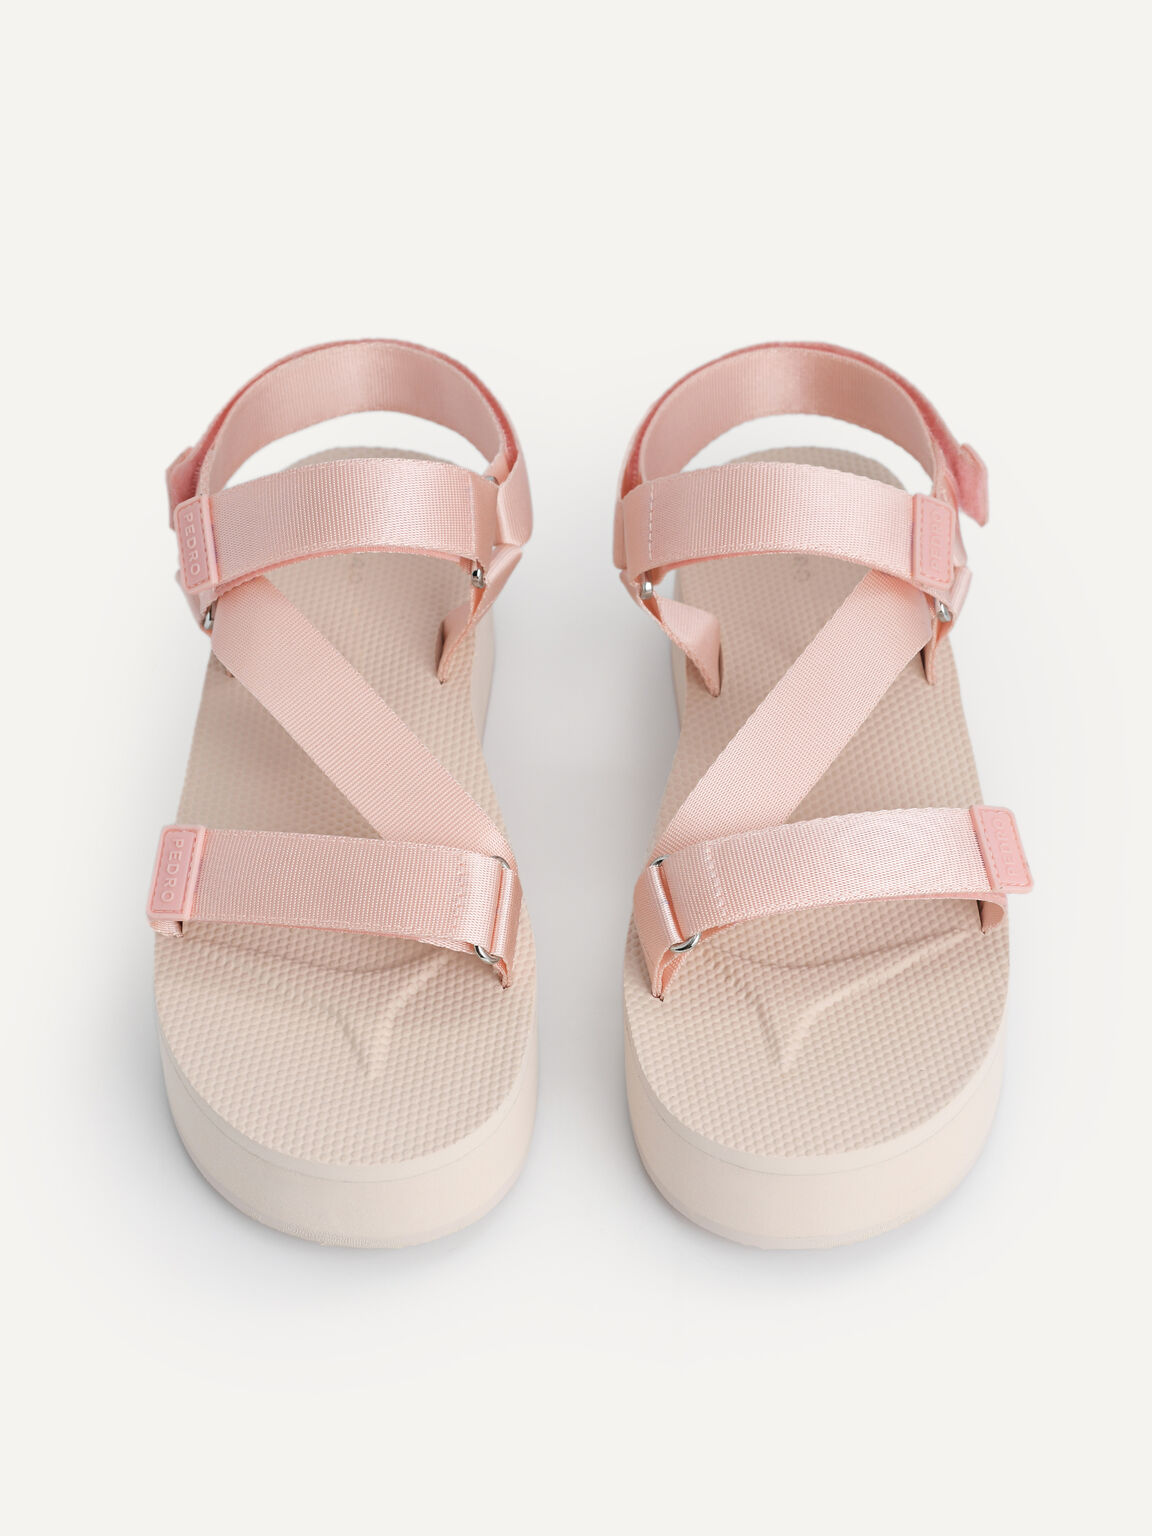 Flatform Sandals, Blush